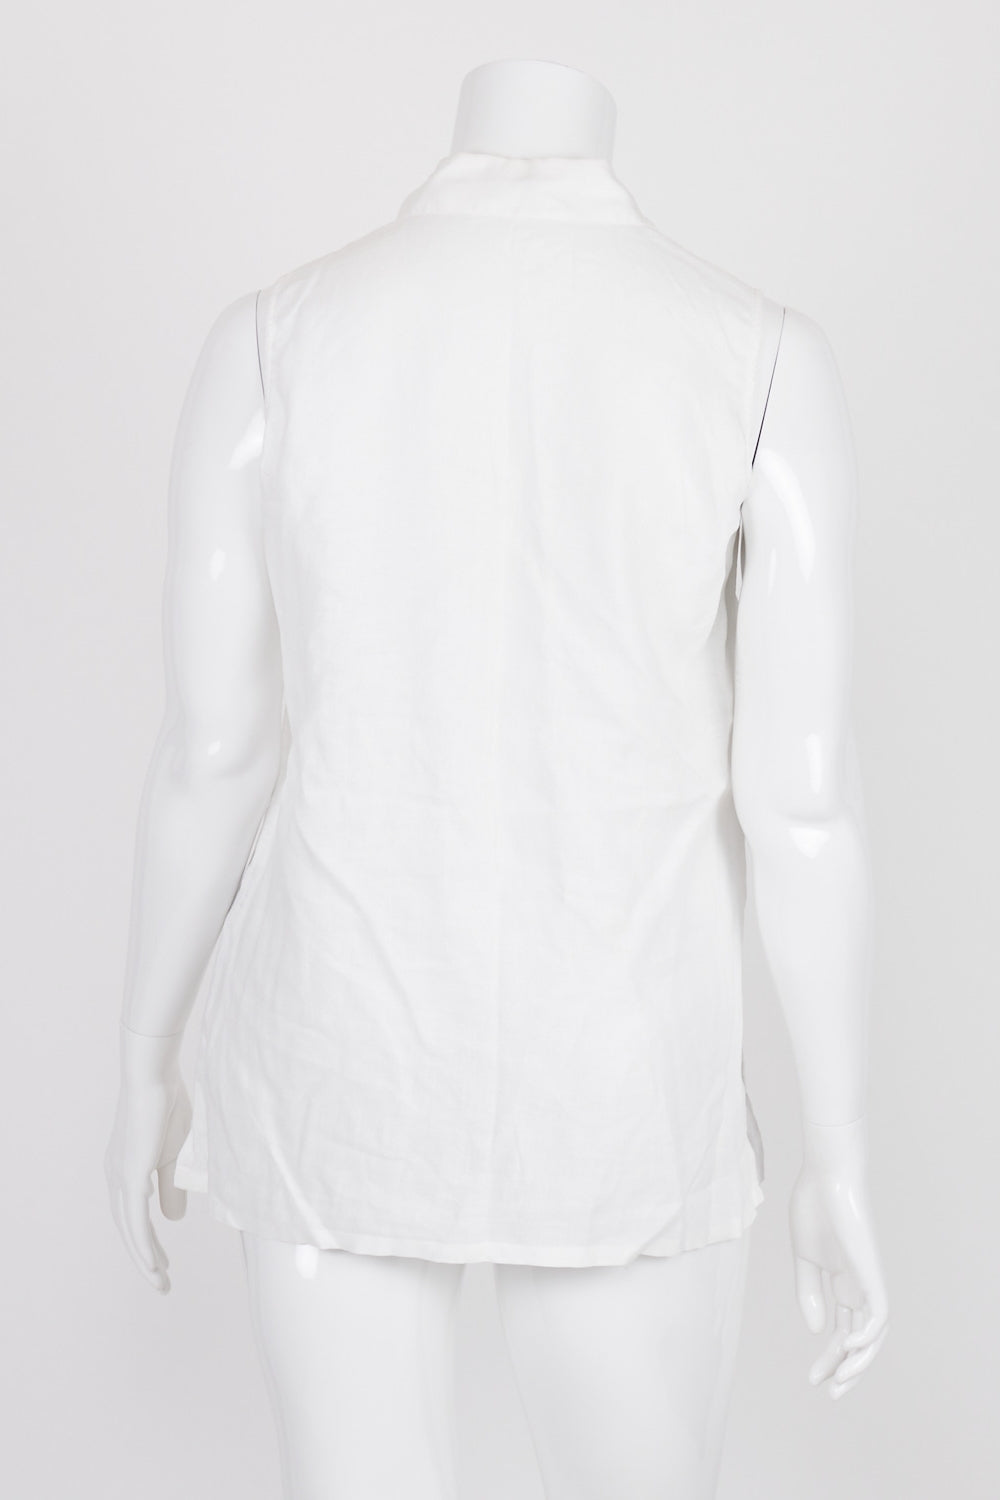 Yarra Trail White Sleeveless Button Down Linen Shirt 18